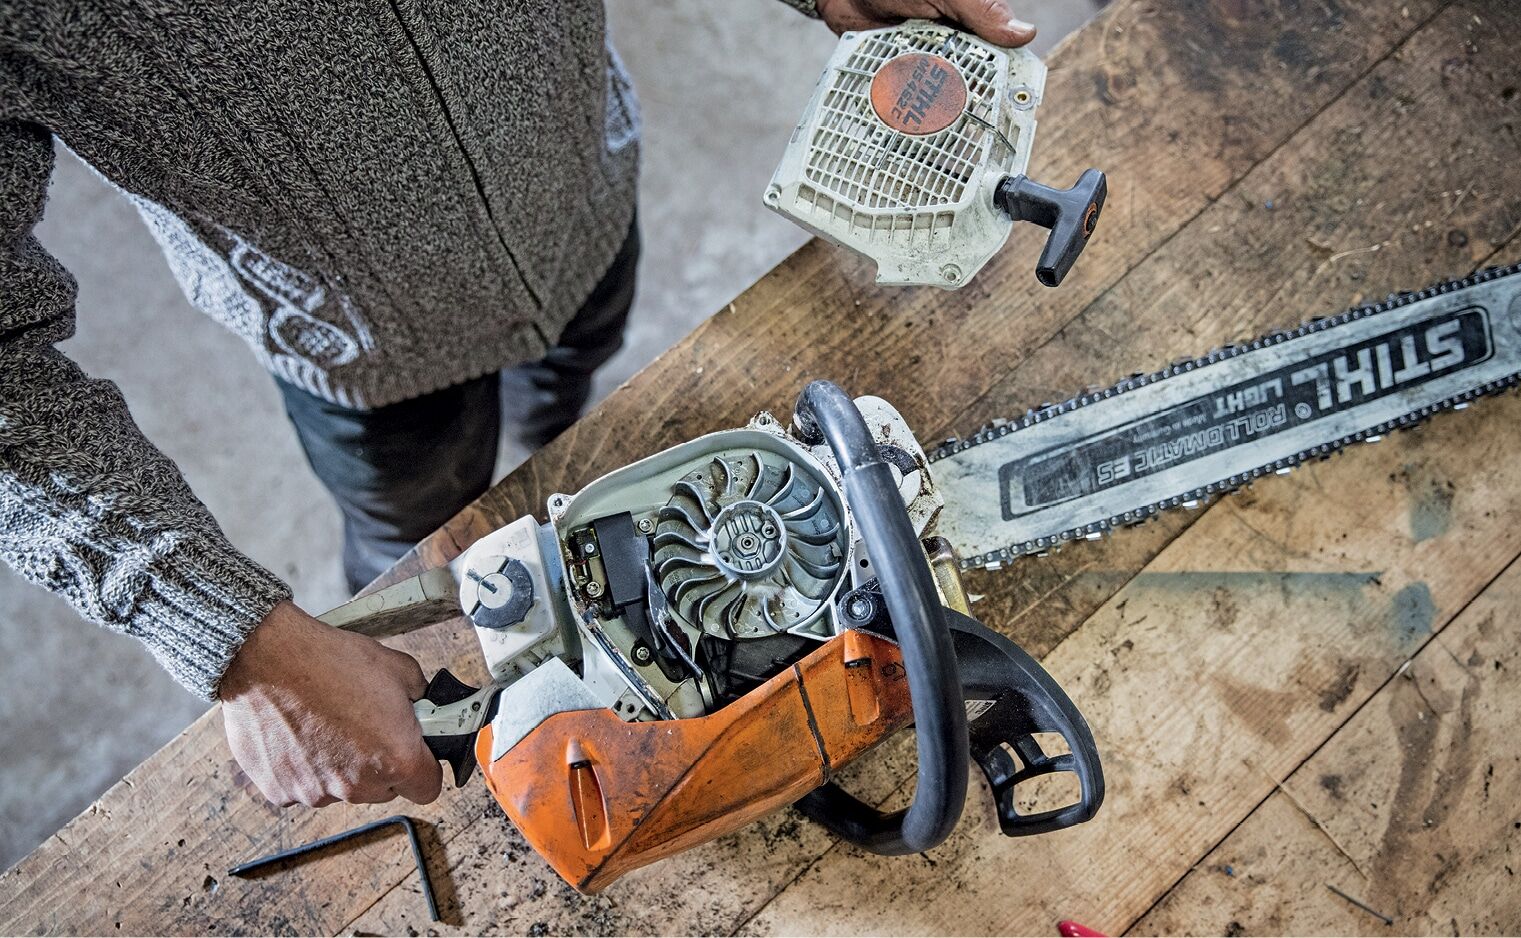 Stihl how to clean my chainsaw - Bendigo Outdoor Power Equipment